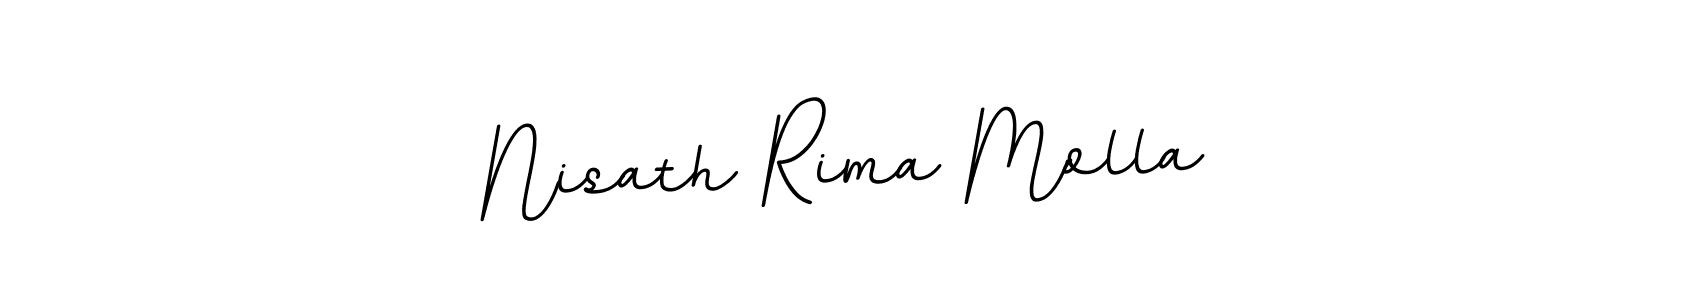 How to Draw Nisath Rima Molla signature style? BallpointsItalic-DORy9 is a latest design signature styles for name Nisath Rima Molla. Nisath Rima Molla signature style 11 images and pictures png